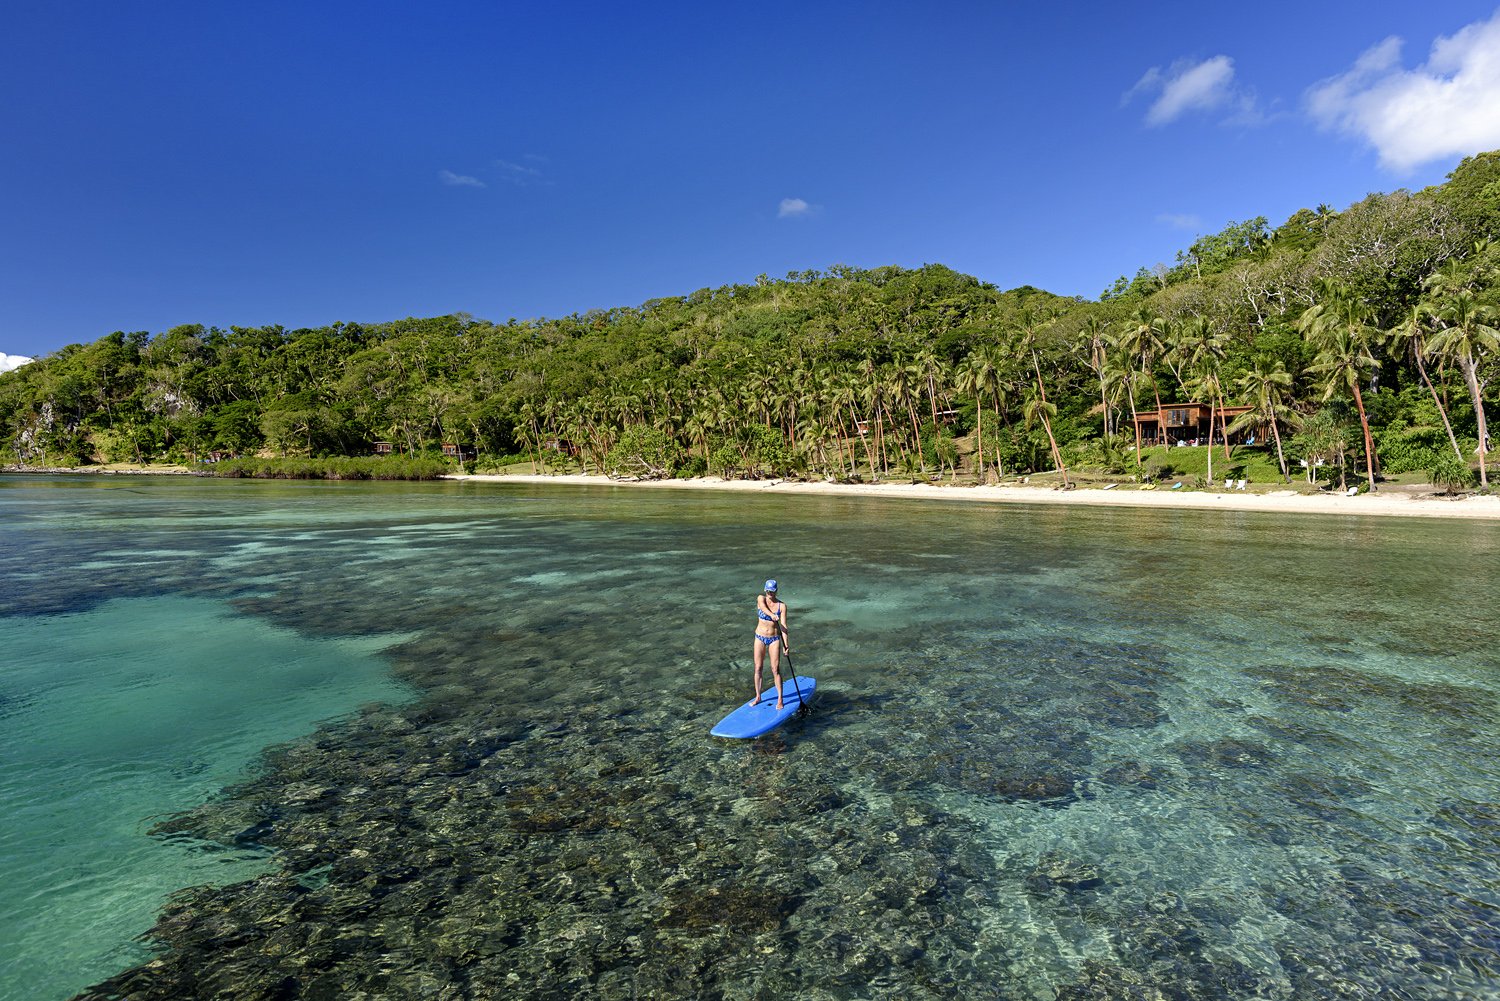 Remote+Resort+Fiji+Islands+SUP+on+House+reef.jpg